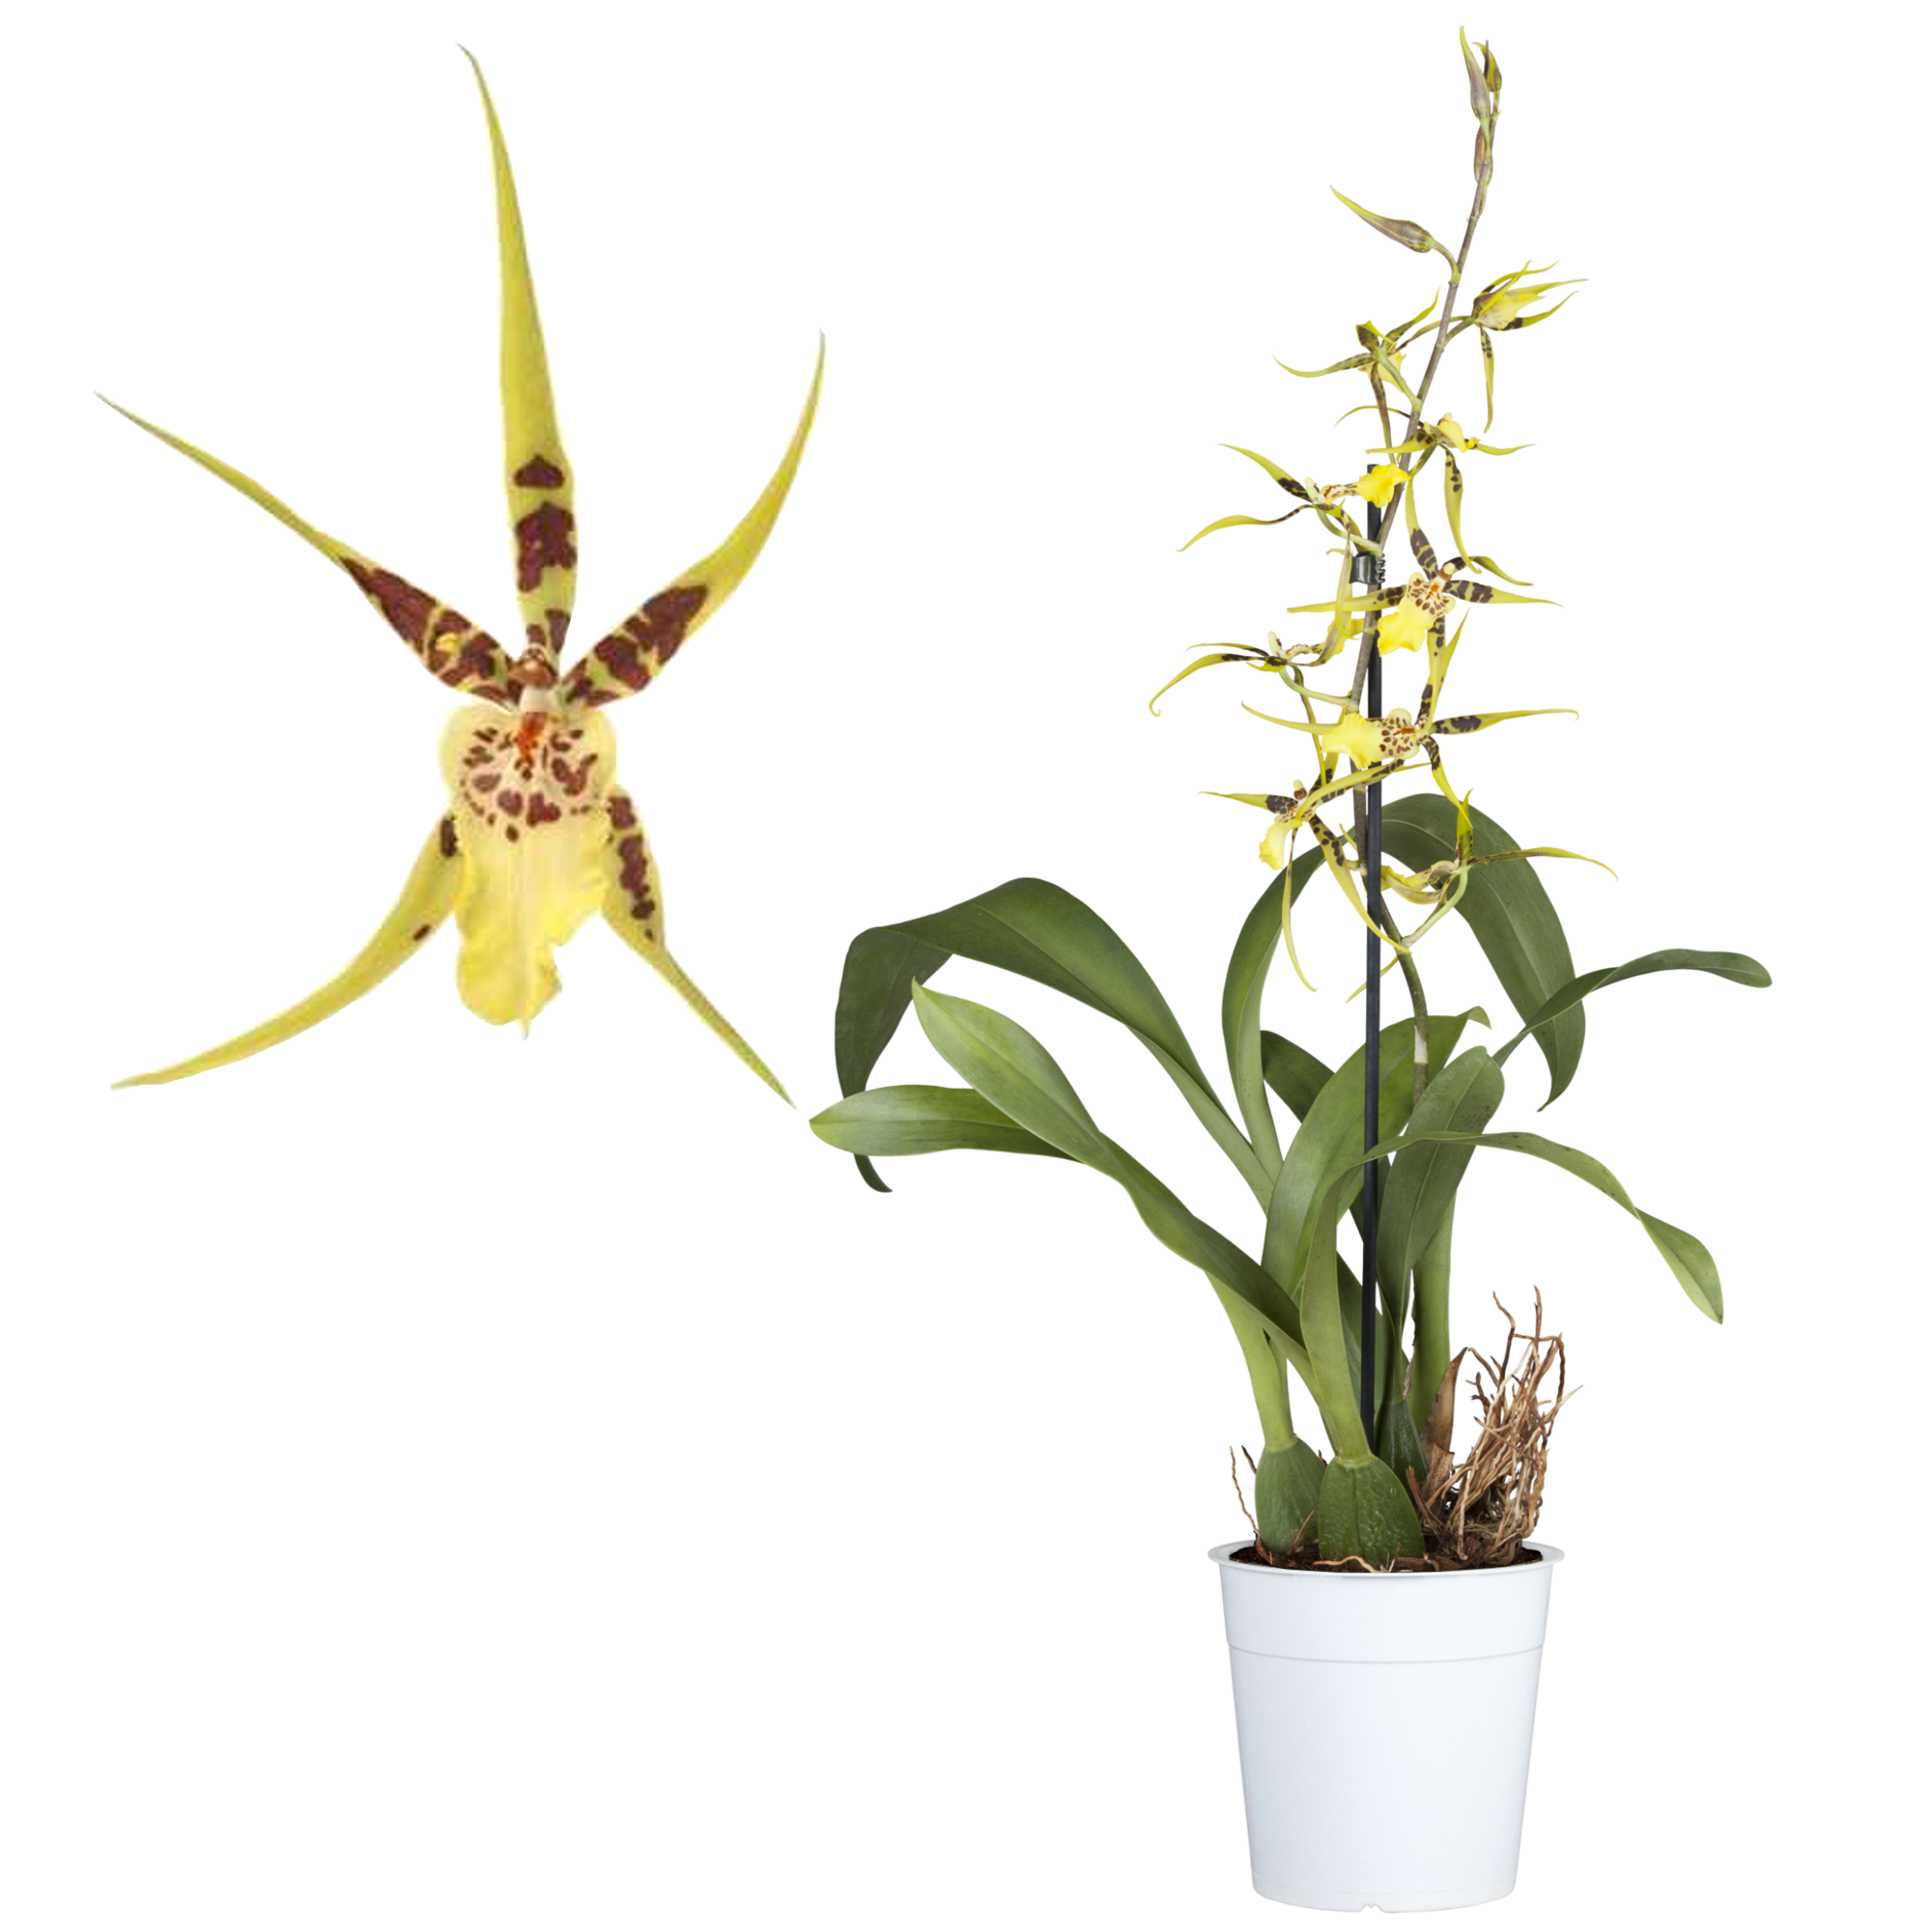 Spinnenorchidee 'Tessa' 1 Rispe gelb/rot, 12 cm Topf + product picture